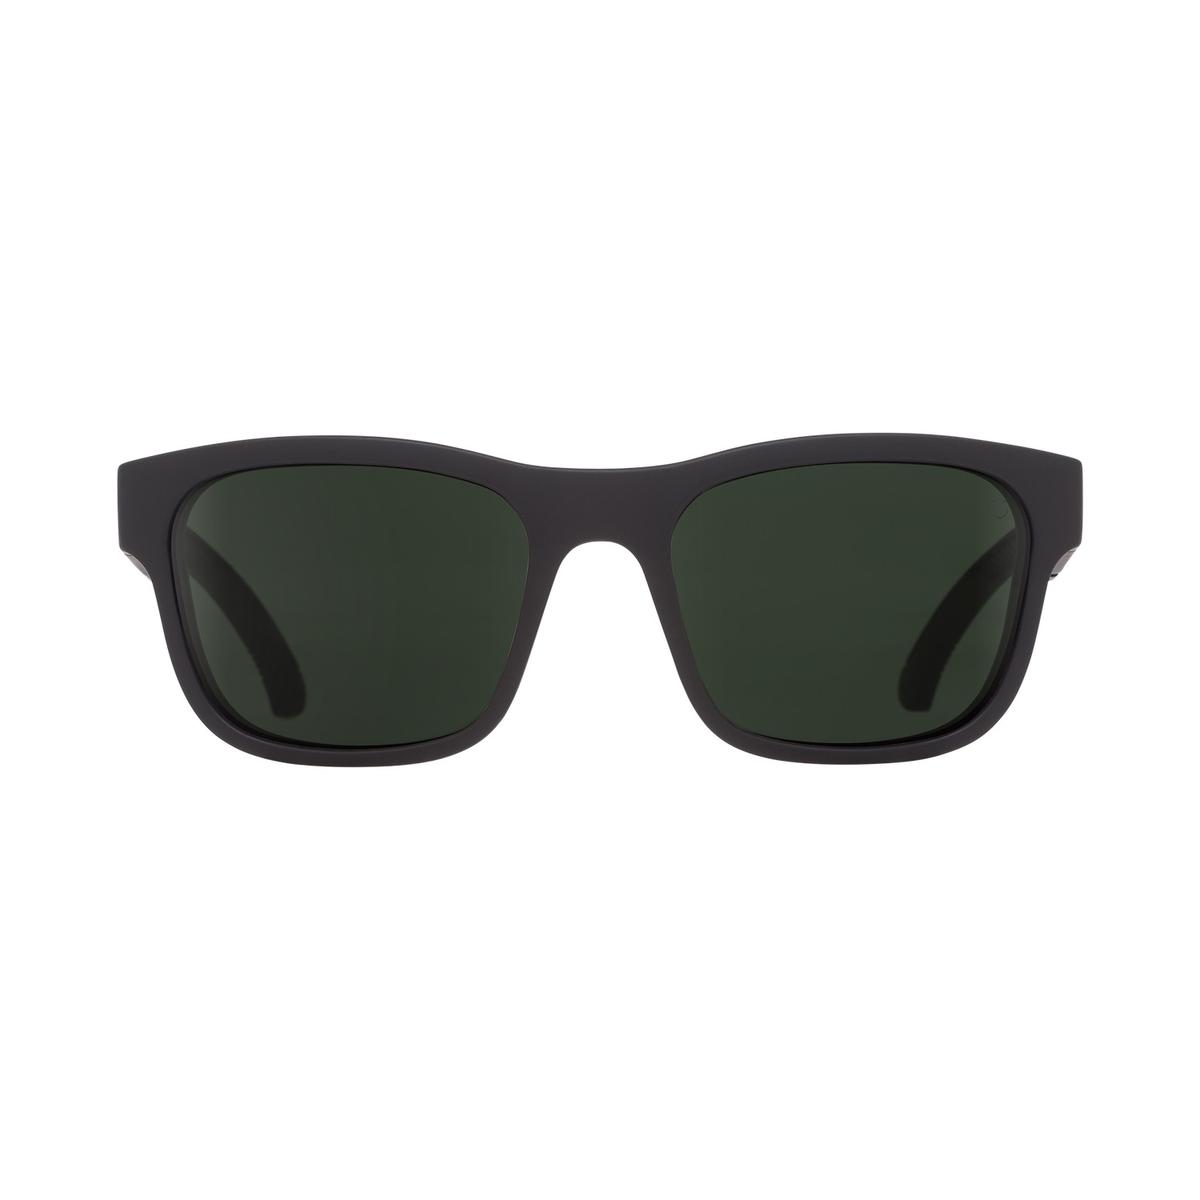 Spy Optic Hunt Men's Sunglasses